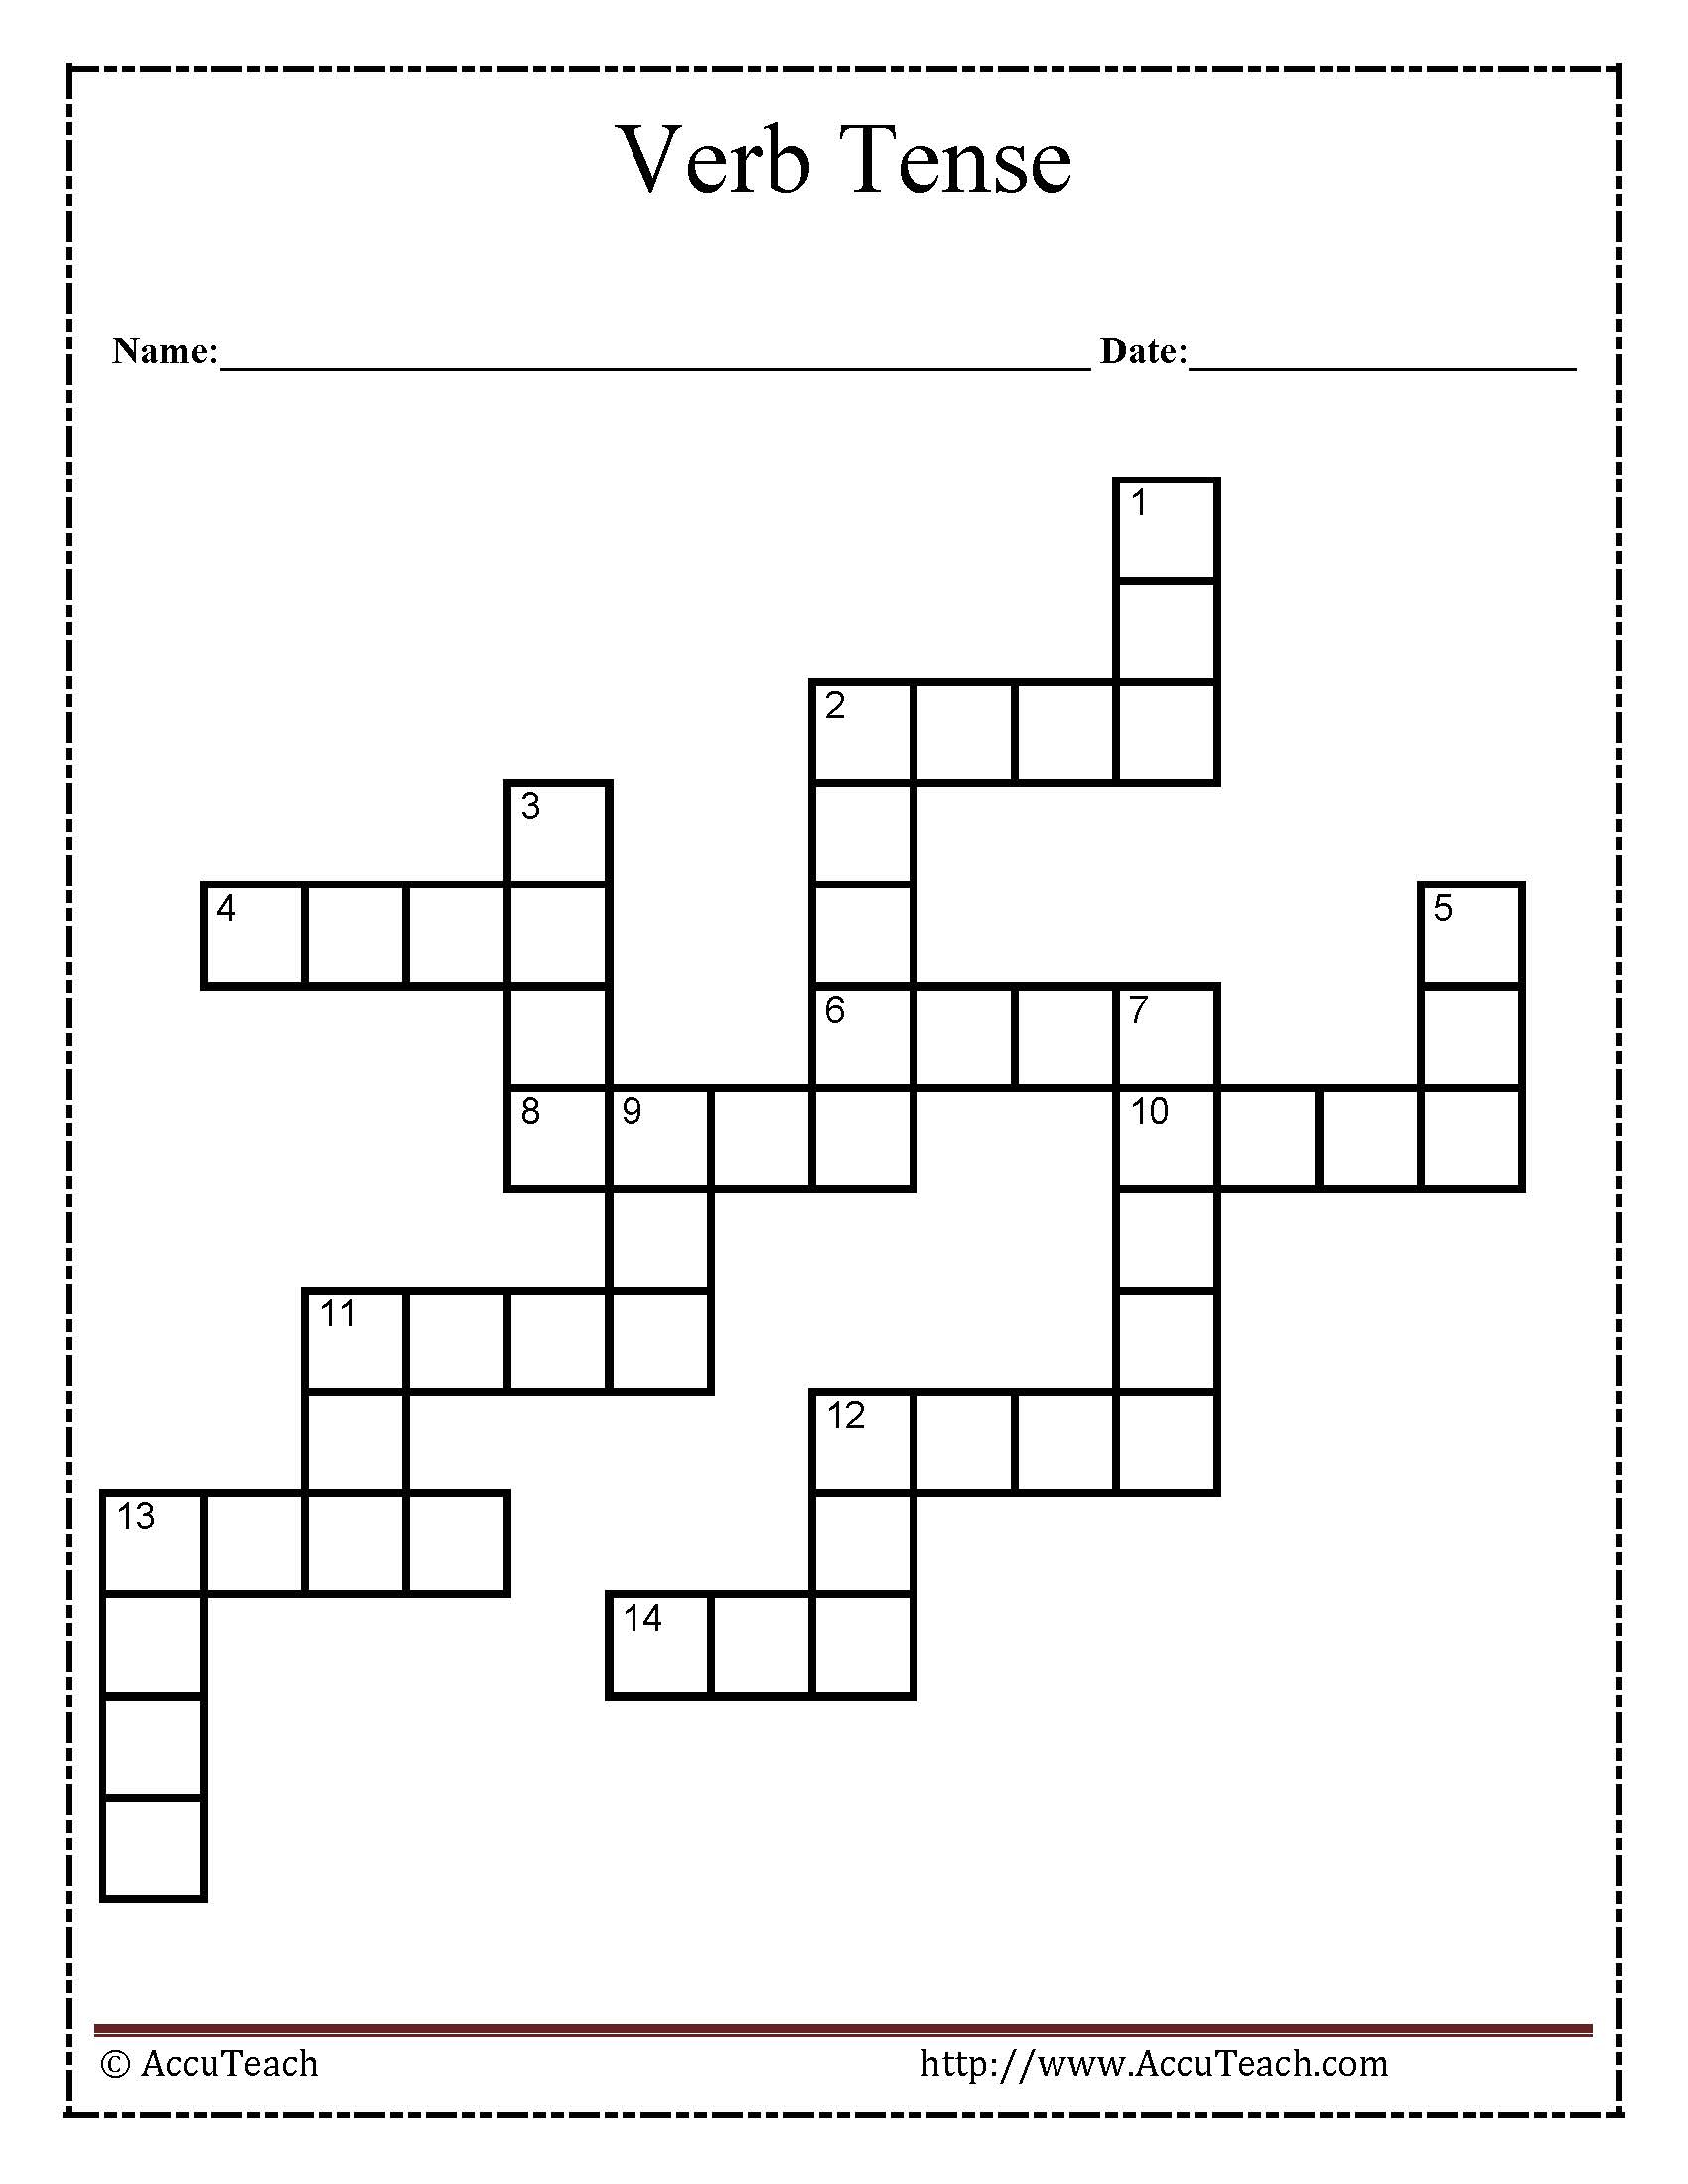 Verb Tense Crossword Puzzle Worksheet - Printable Crossword Puzzles Grade 4